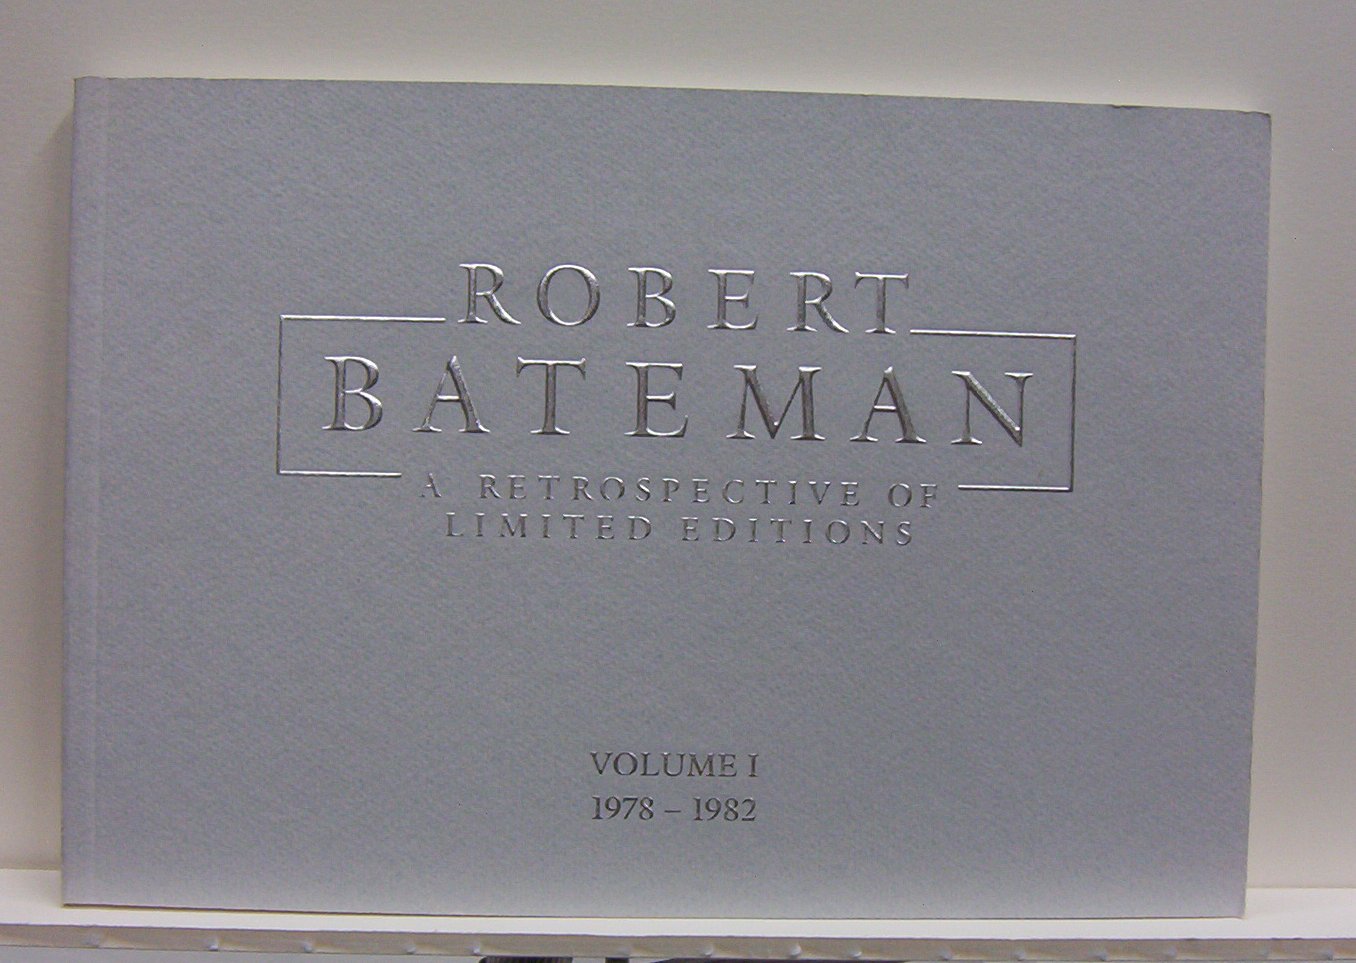 Robert bateman Retrospective 1